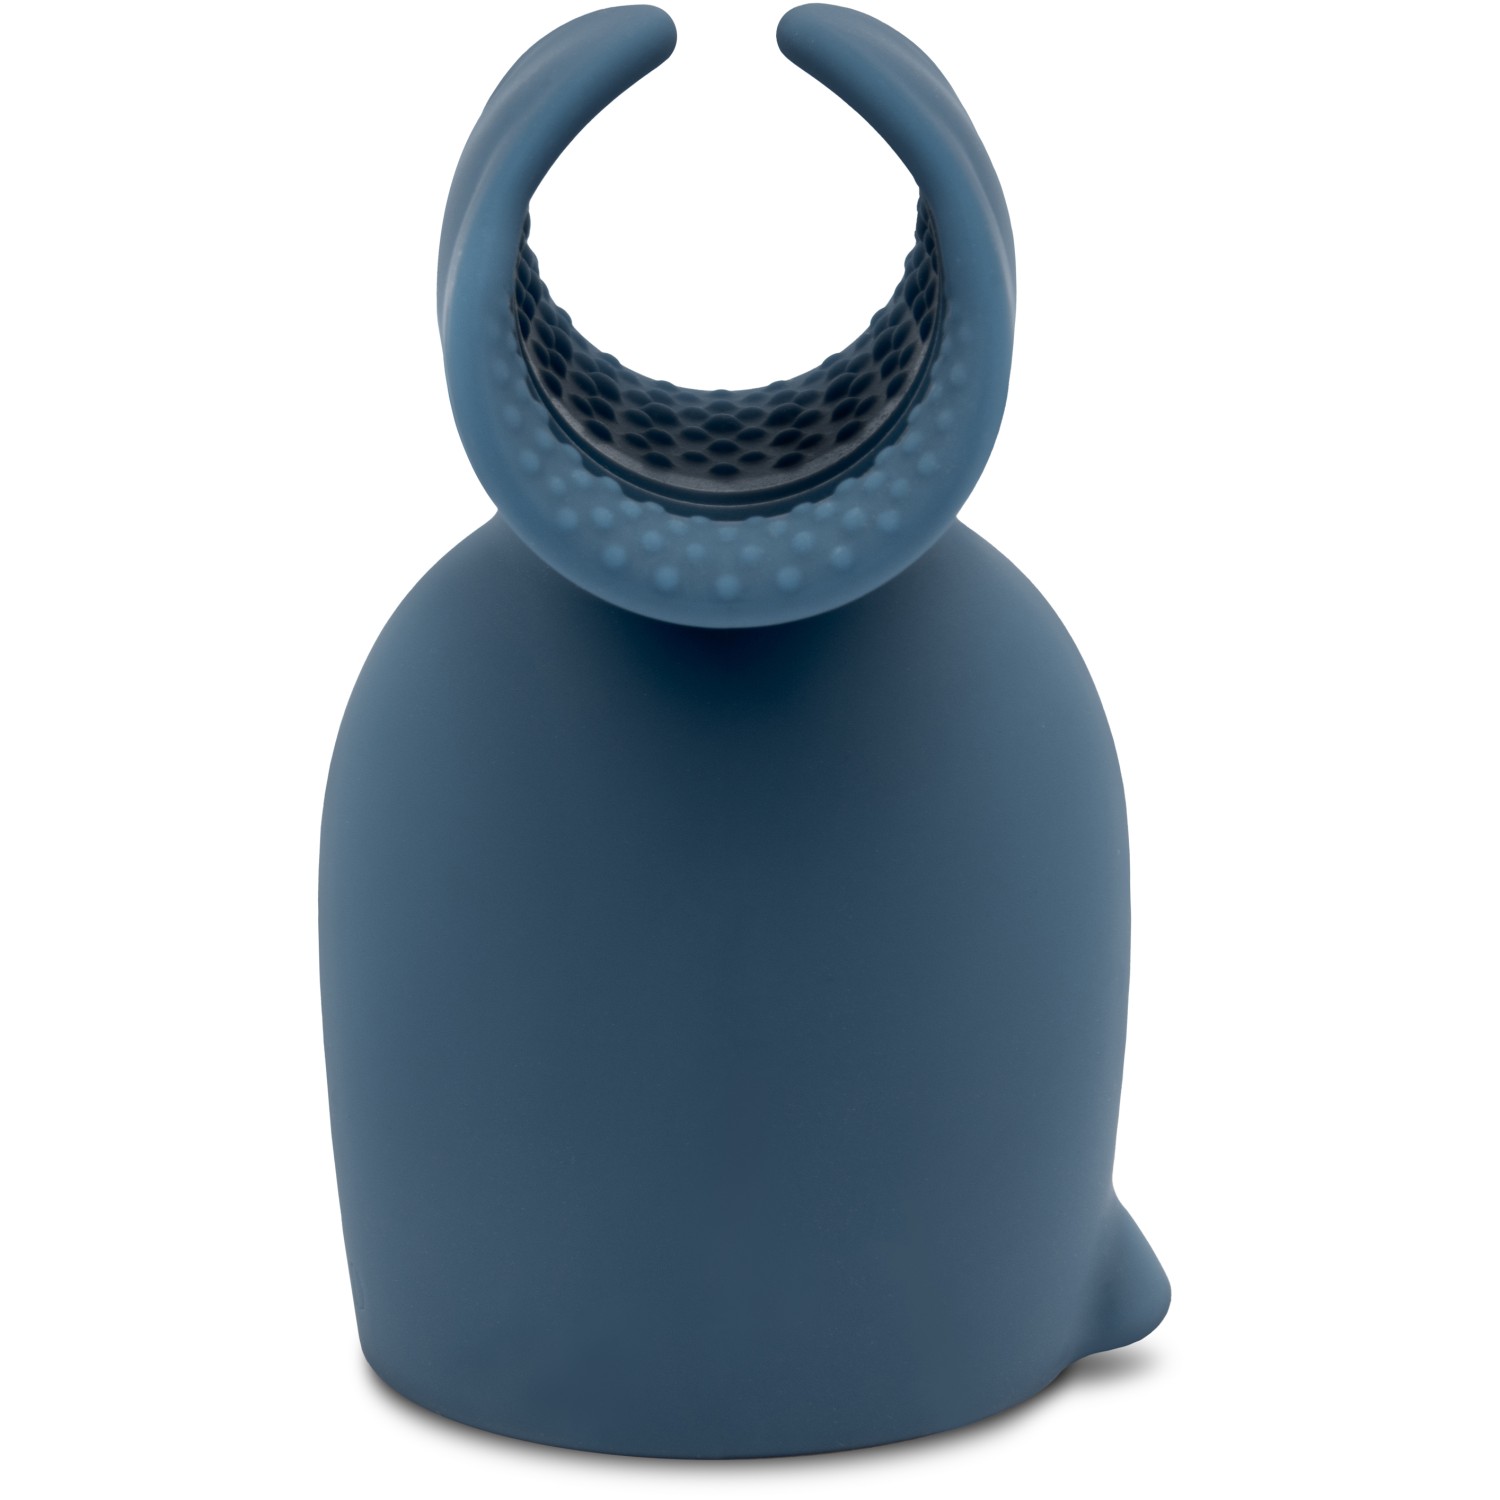 Насадка для мастурбации «Stroke» для вибромассажера ванд, цвет синий, Le Wand LW-049, из материала Силикон, длина 9.13 см.